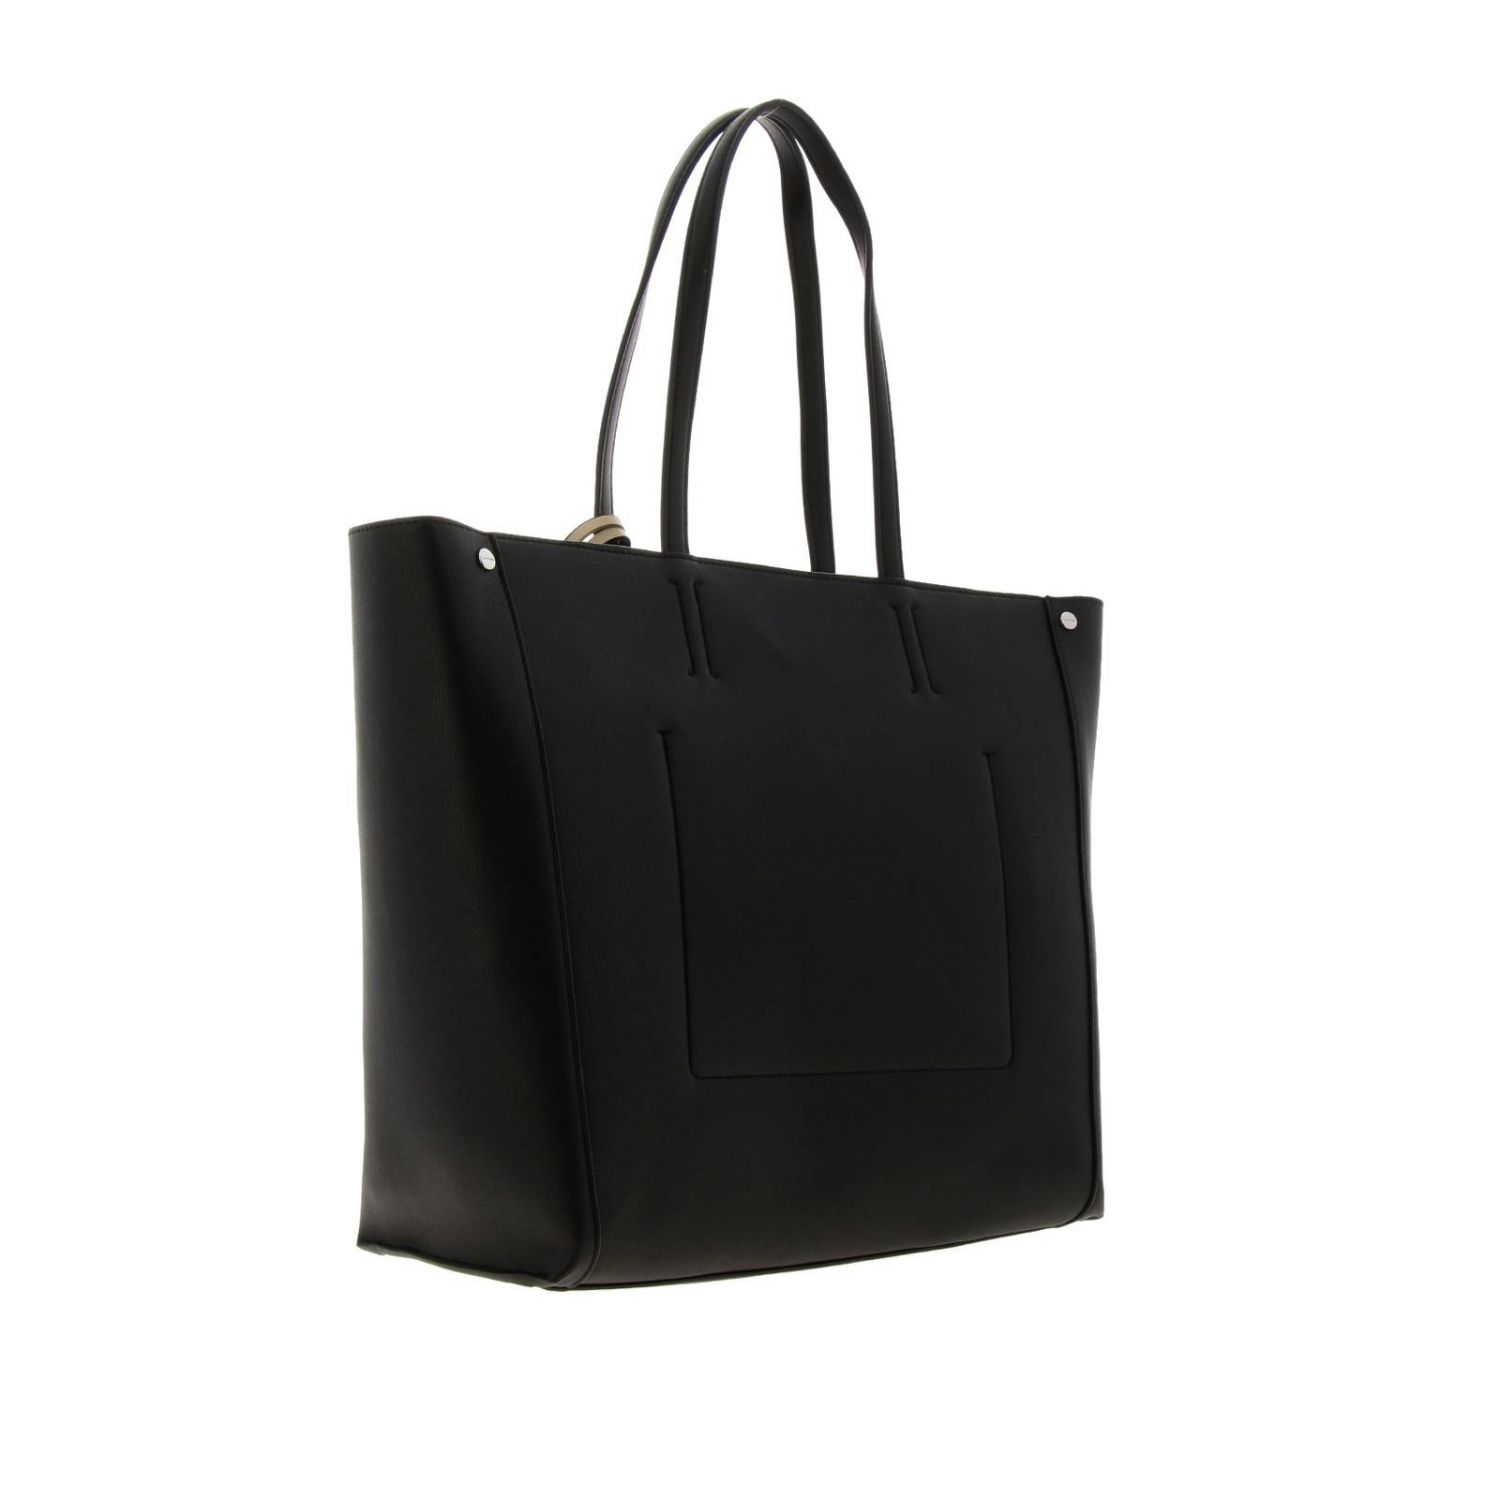 Calvin Klein Outlet: shoulder bag for women - Black | Calvin Klein ...